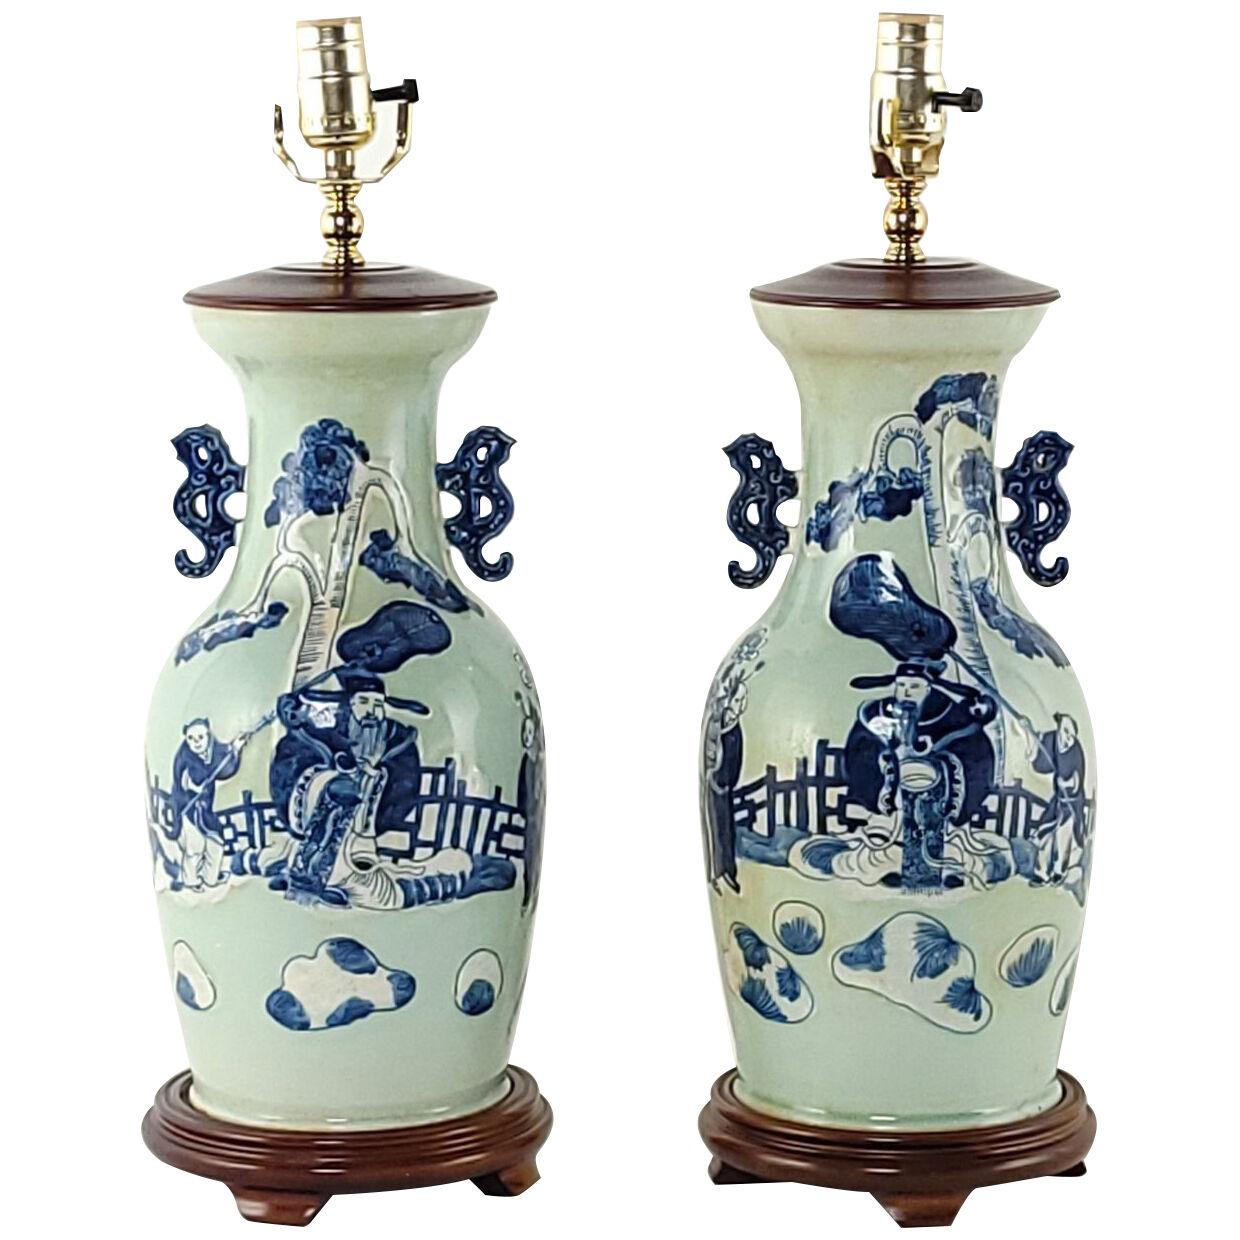 Pair 19th century Chinese celadon & blue vase lamps, c. 1880